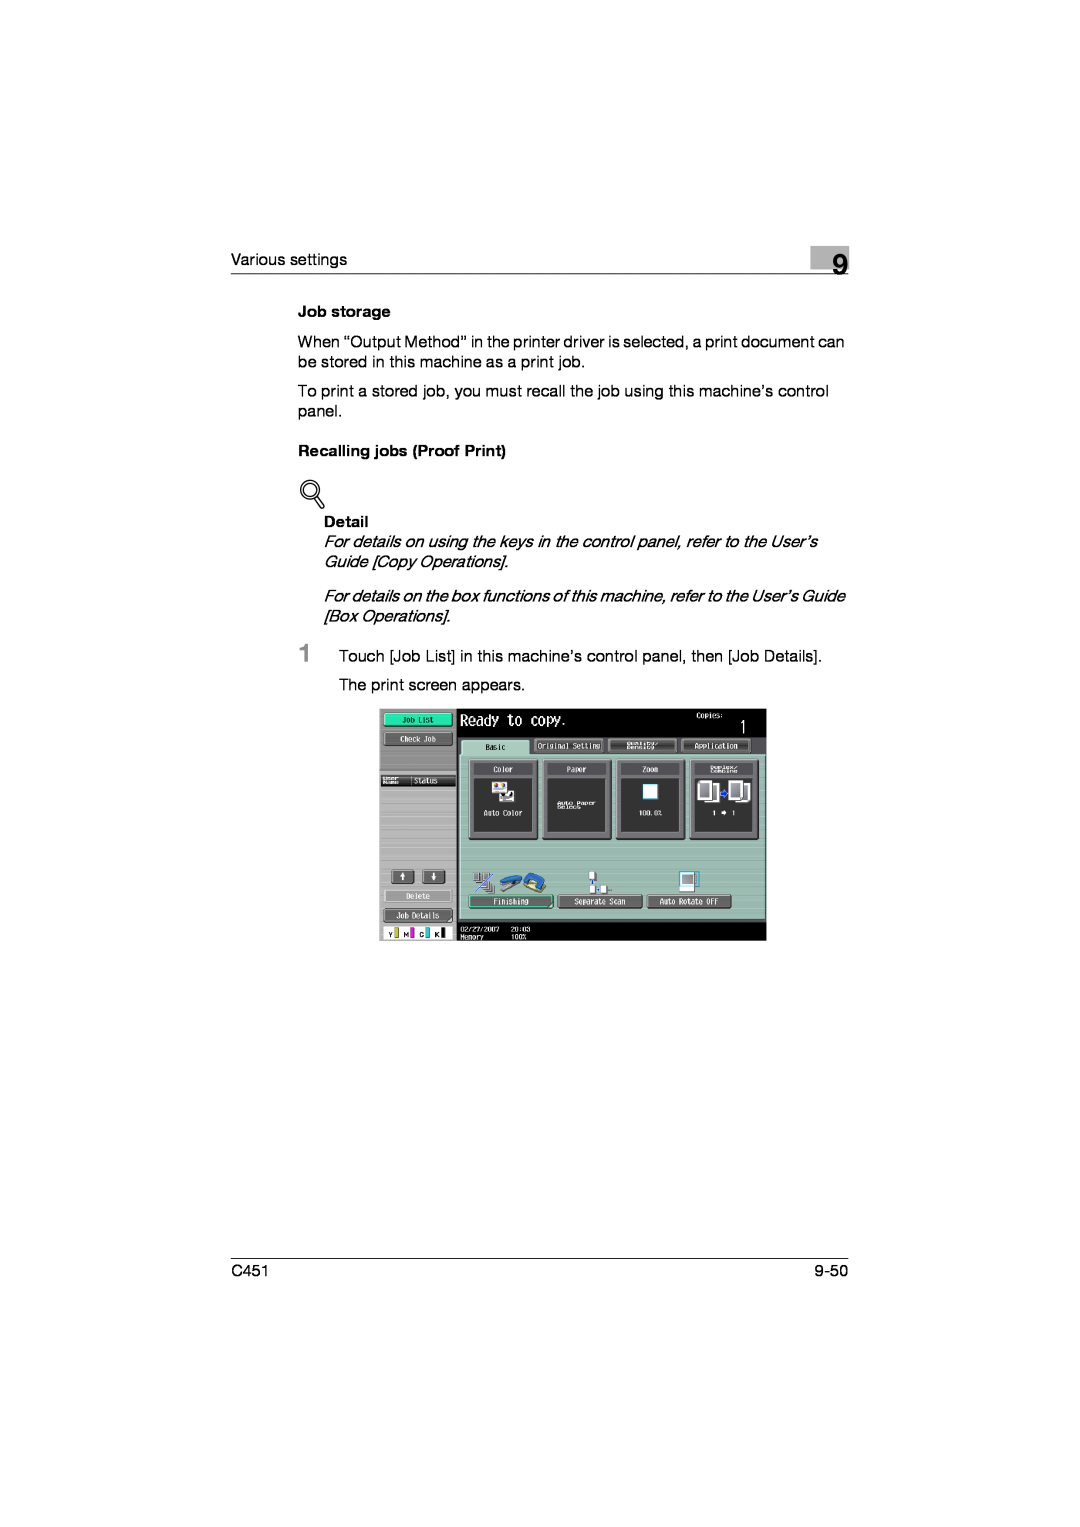 Konica Minolta C451 manual Job storage, Recalling jobs Proof Print, Detail 